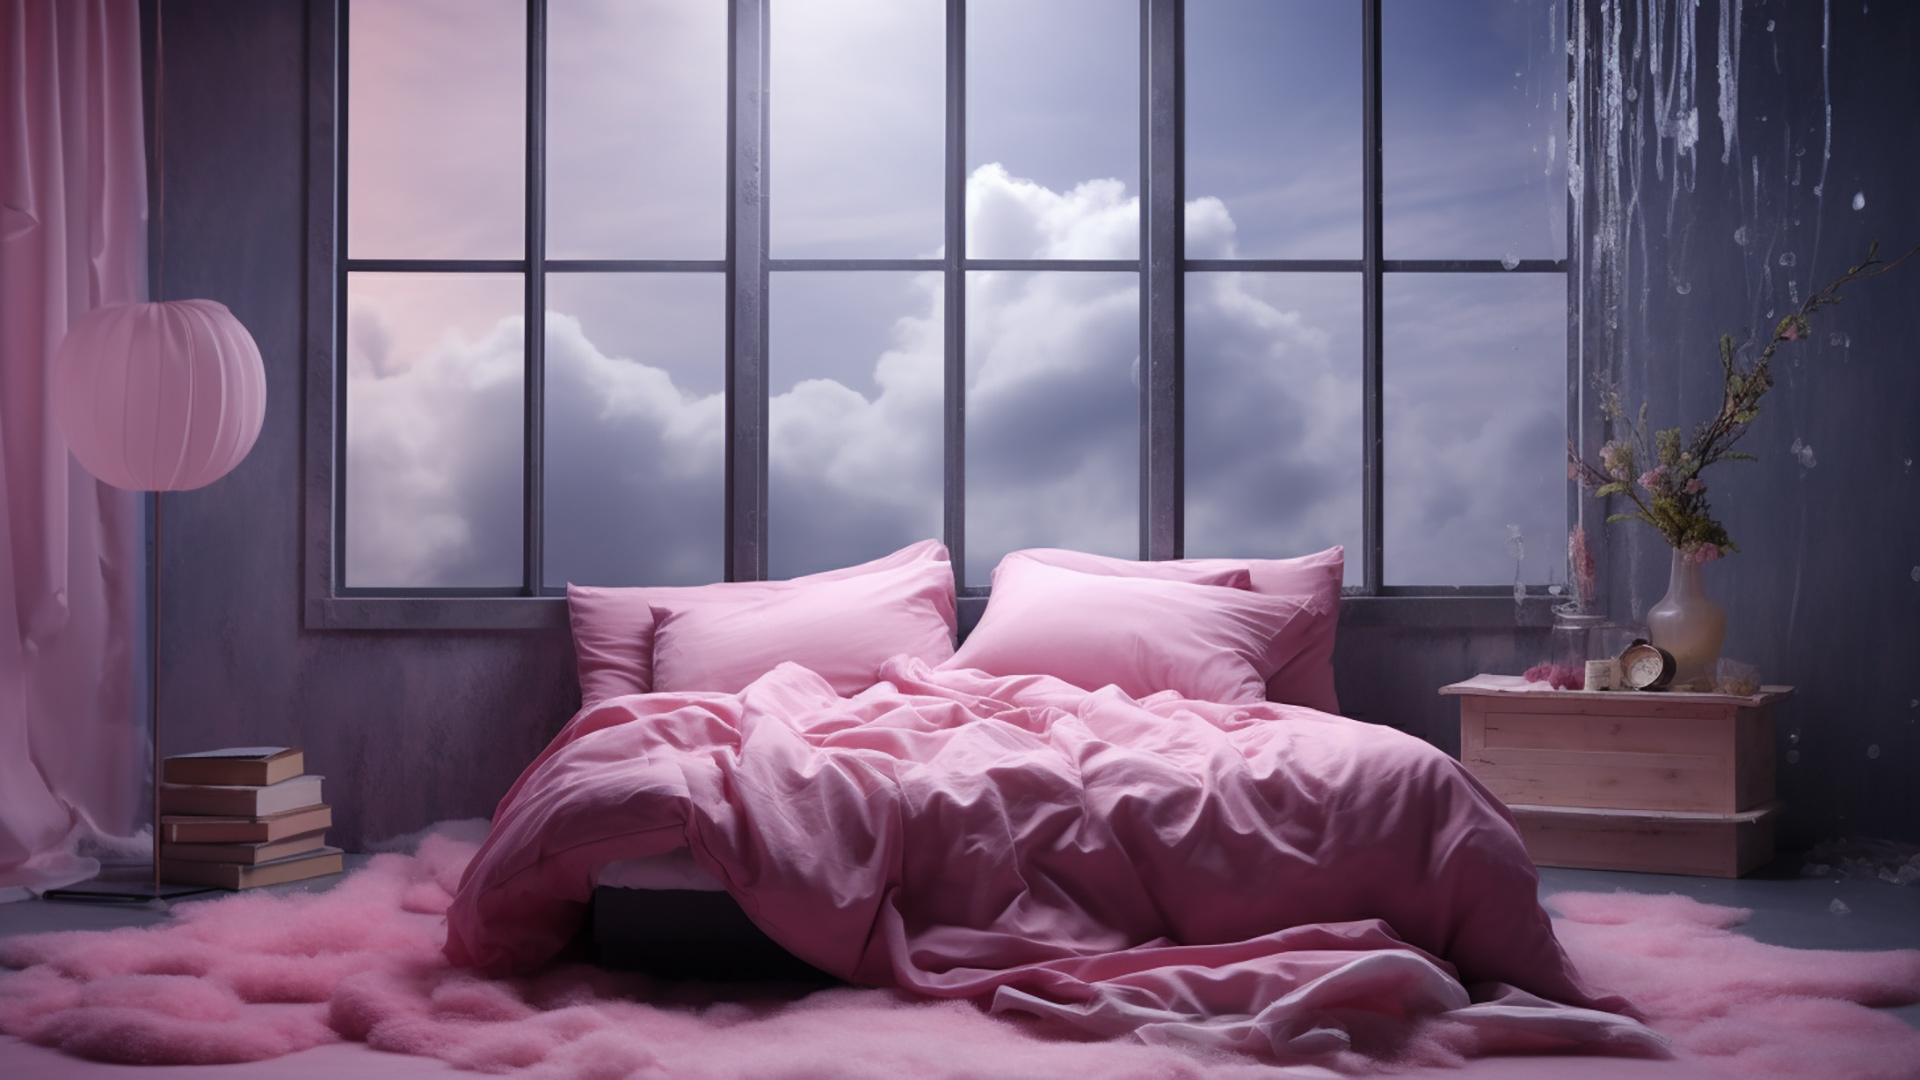 In the Pink Bedroom Aesthetics Meet Rainy Day Window Views